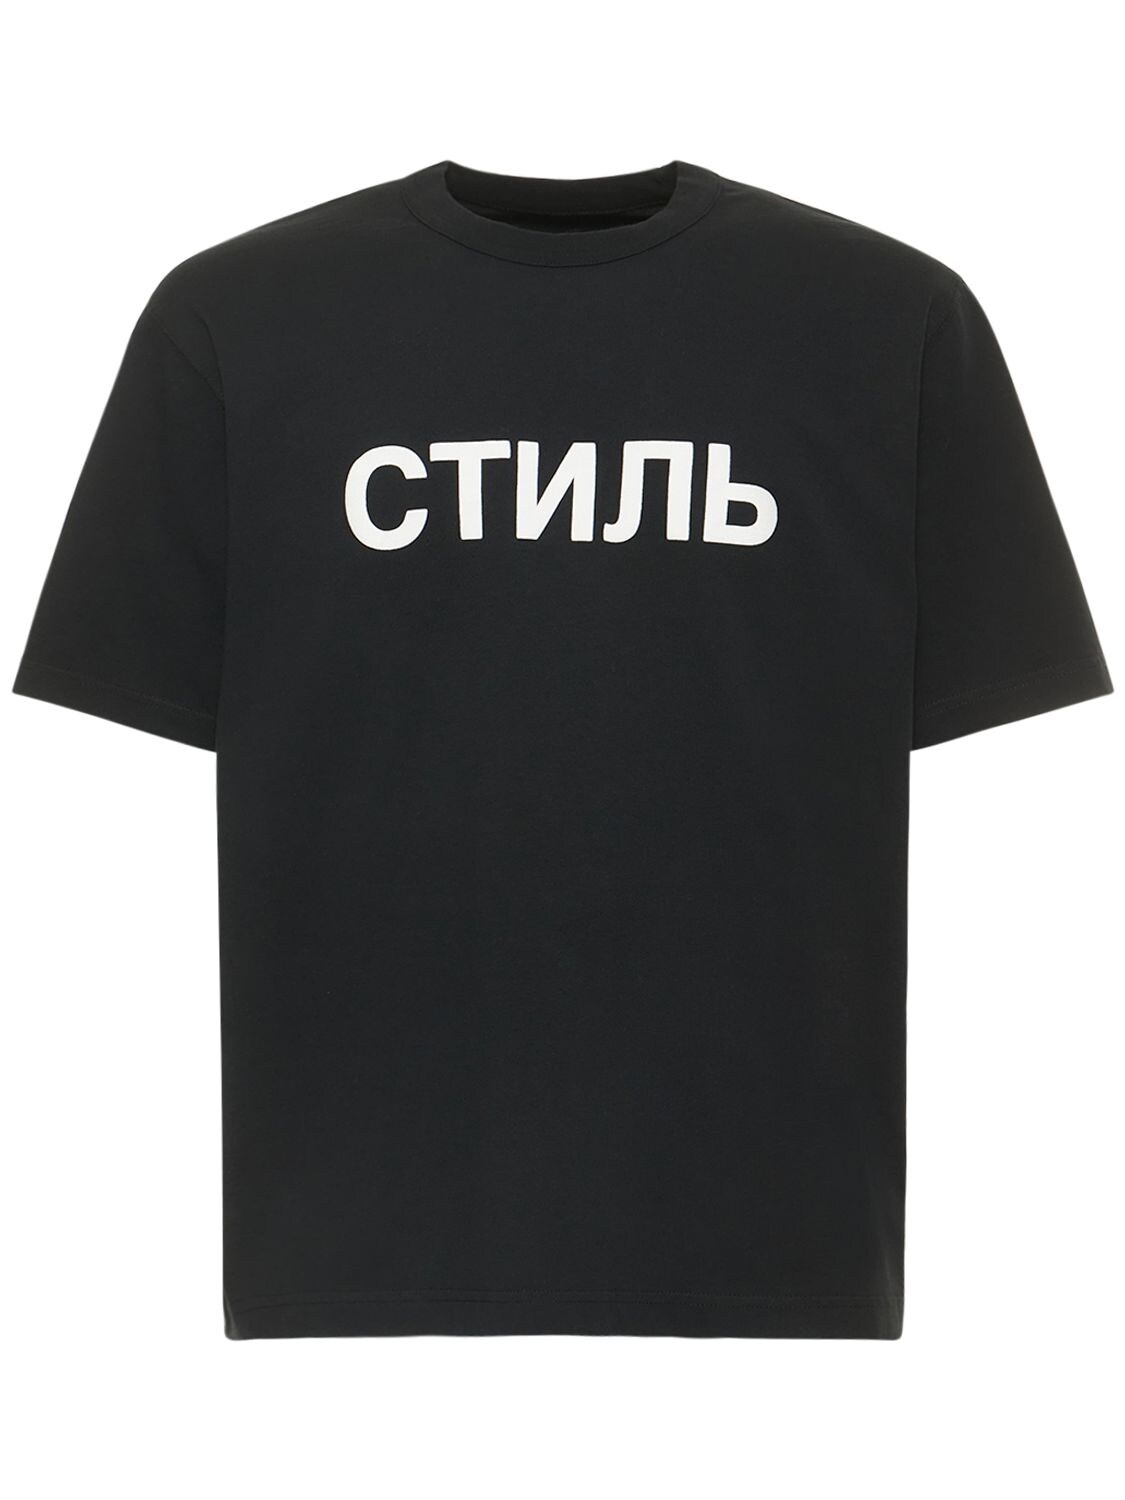 T-shirt En Jersey De Coton Imprimé Ctnmb - HERON PRESTON - Modalova